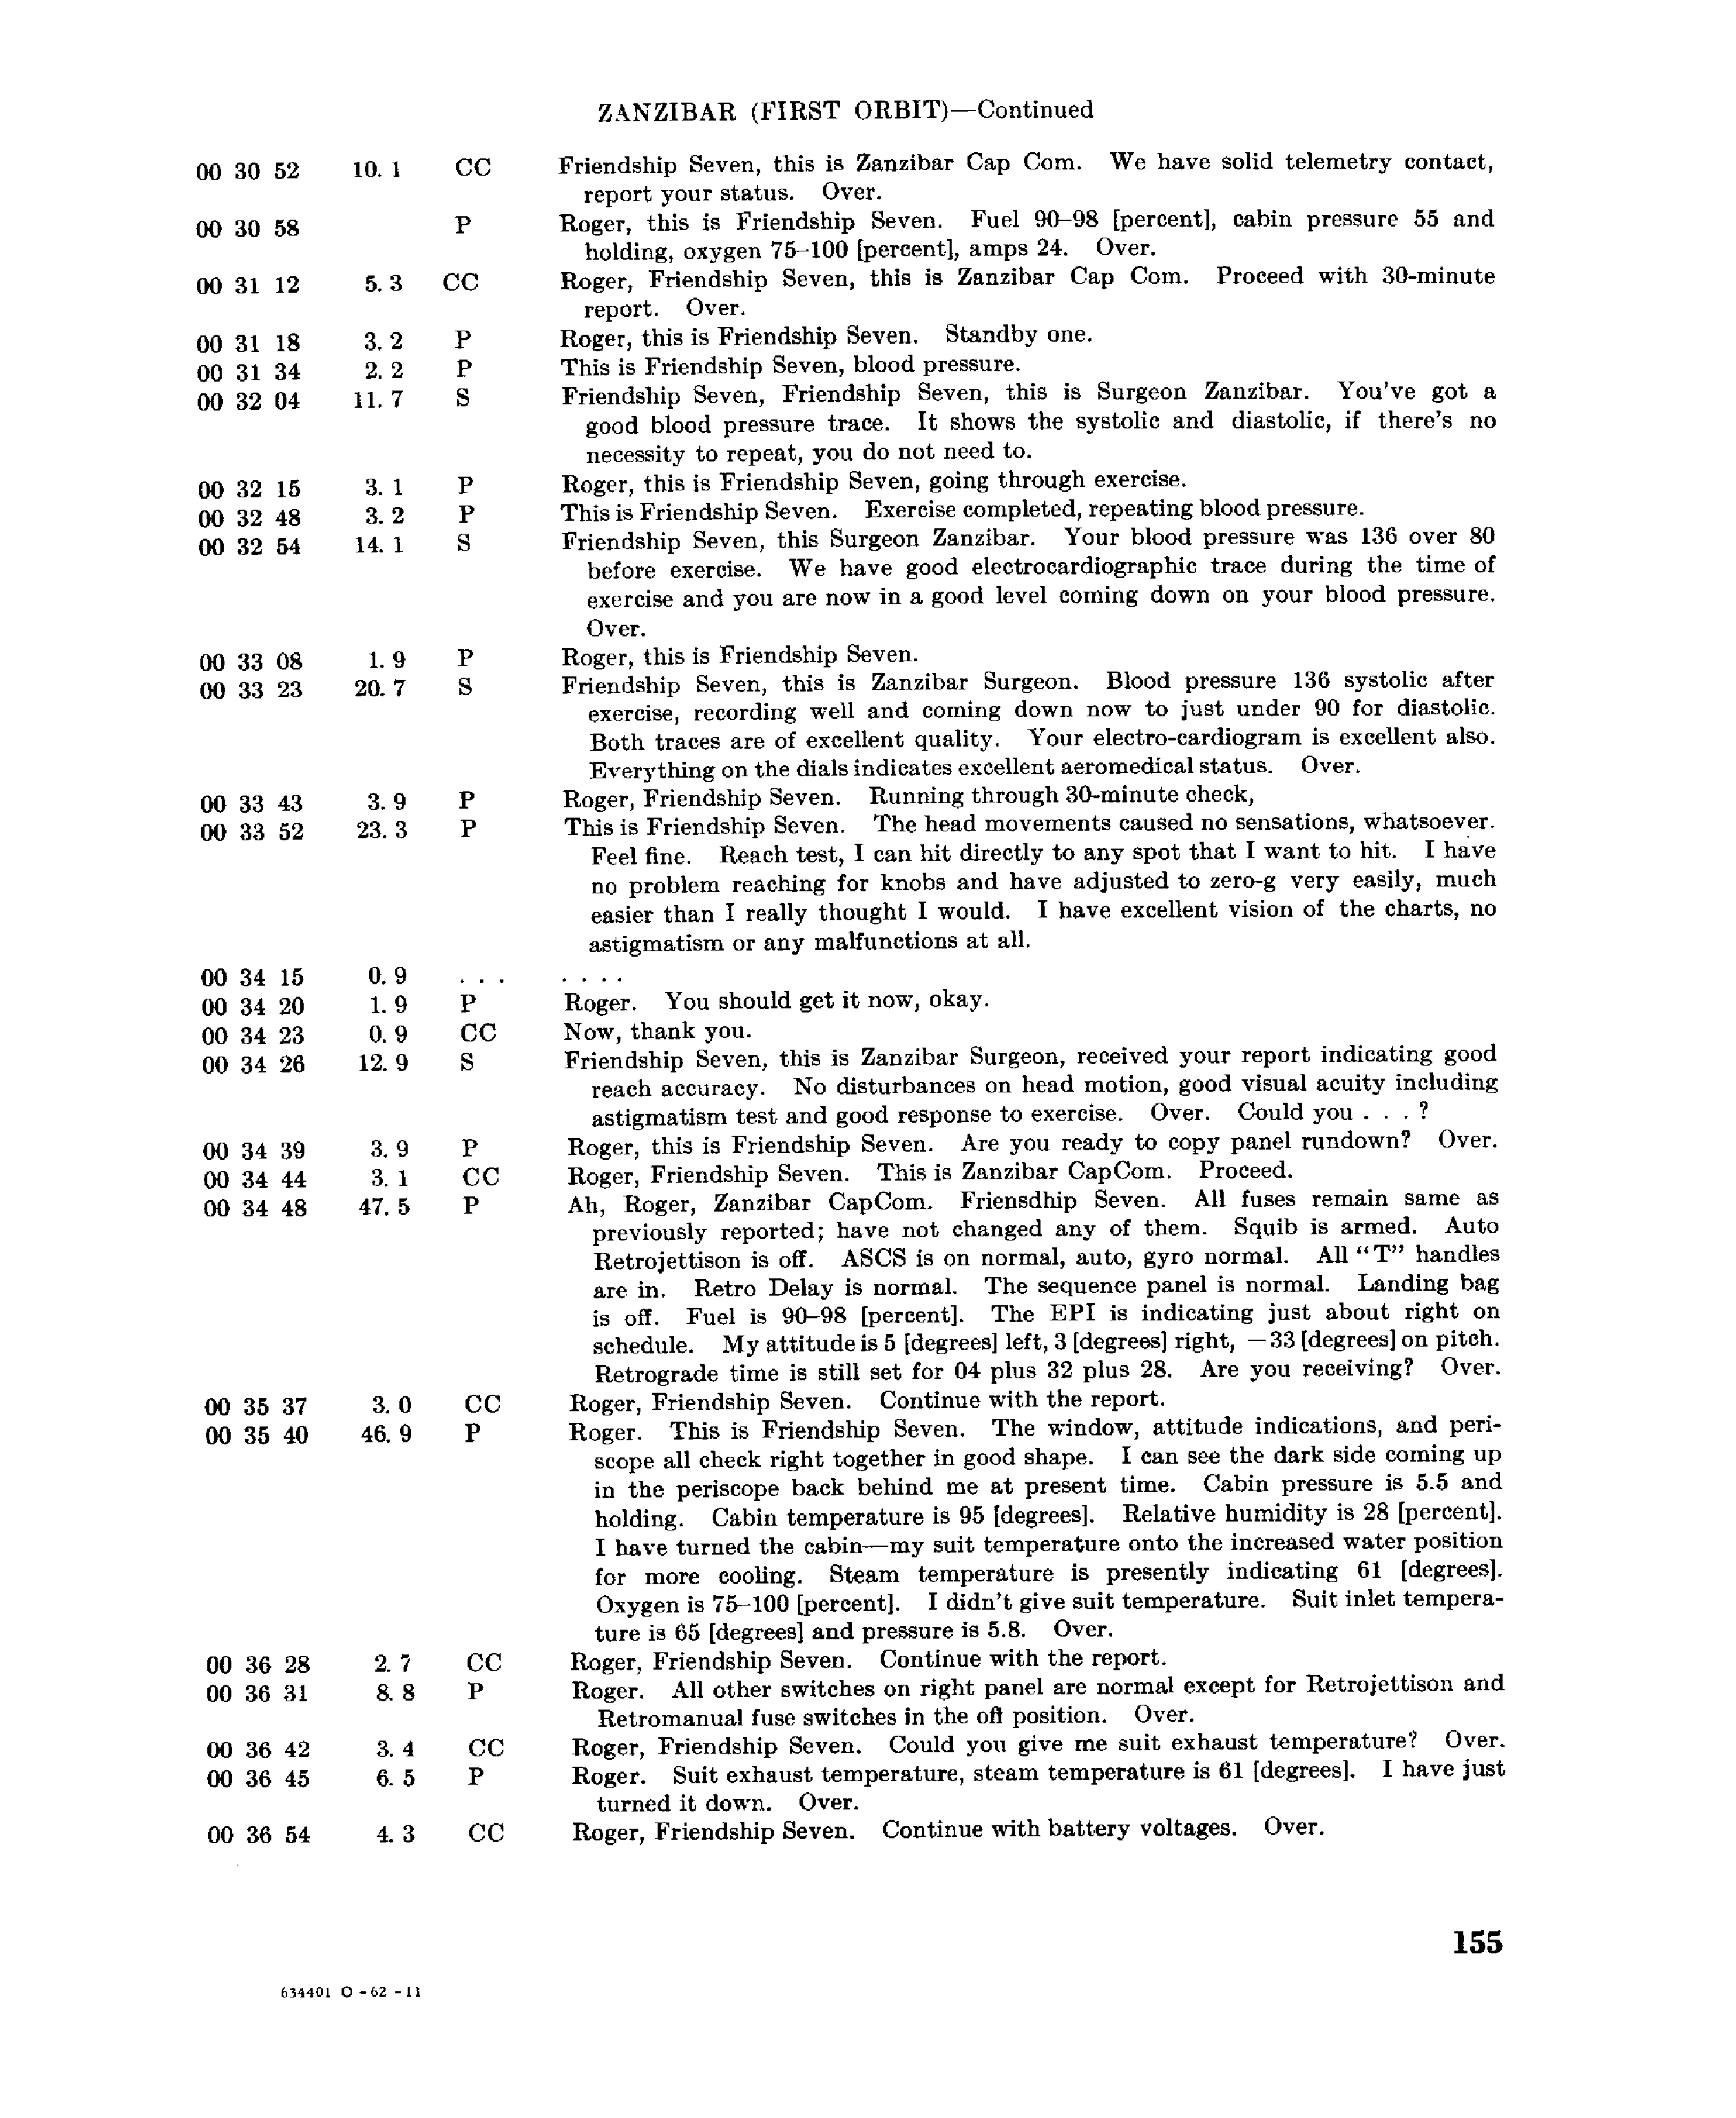 Page 154 of Mercury 6’s original transcript